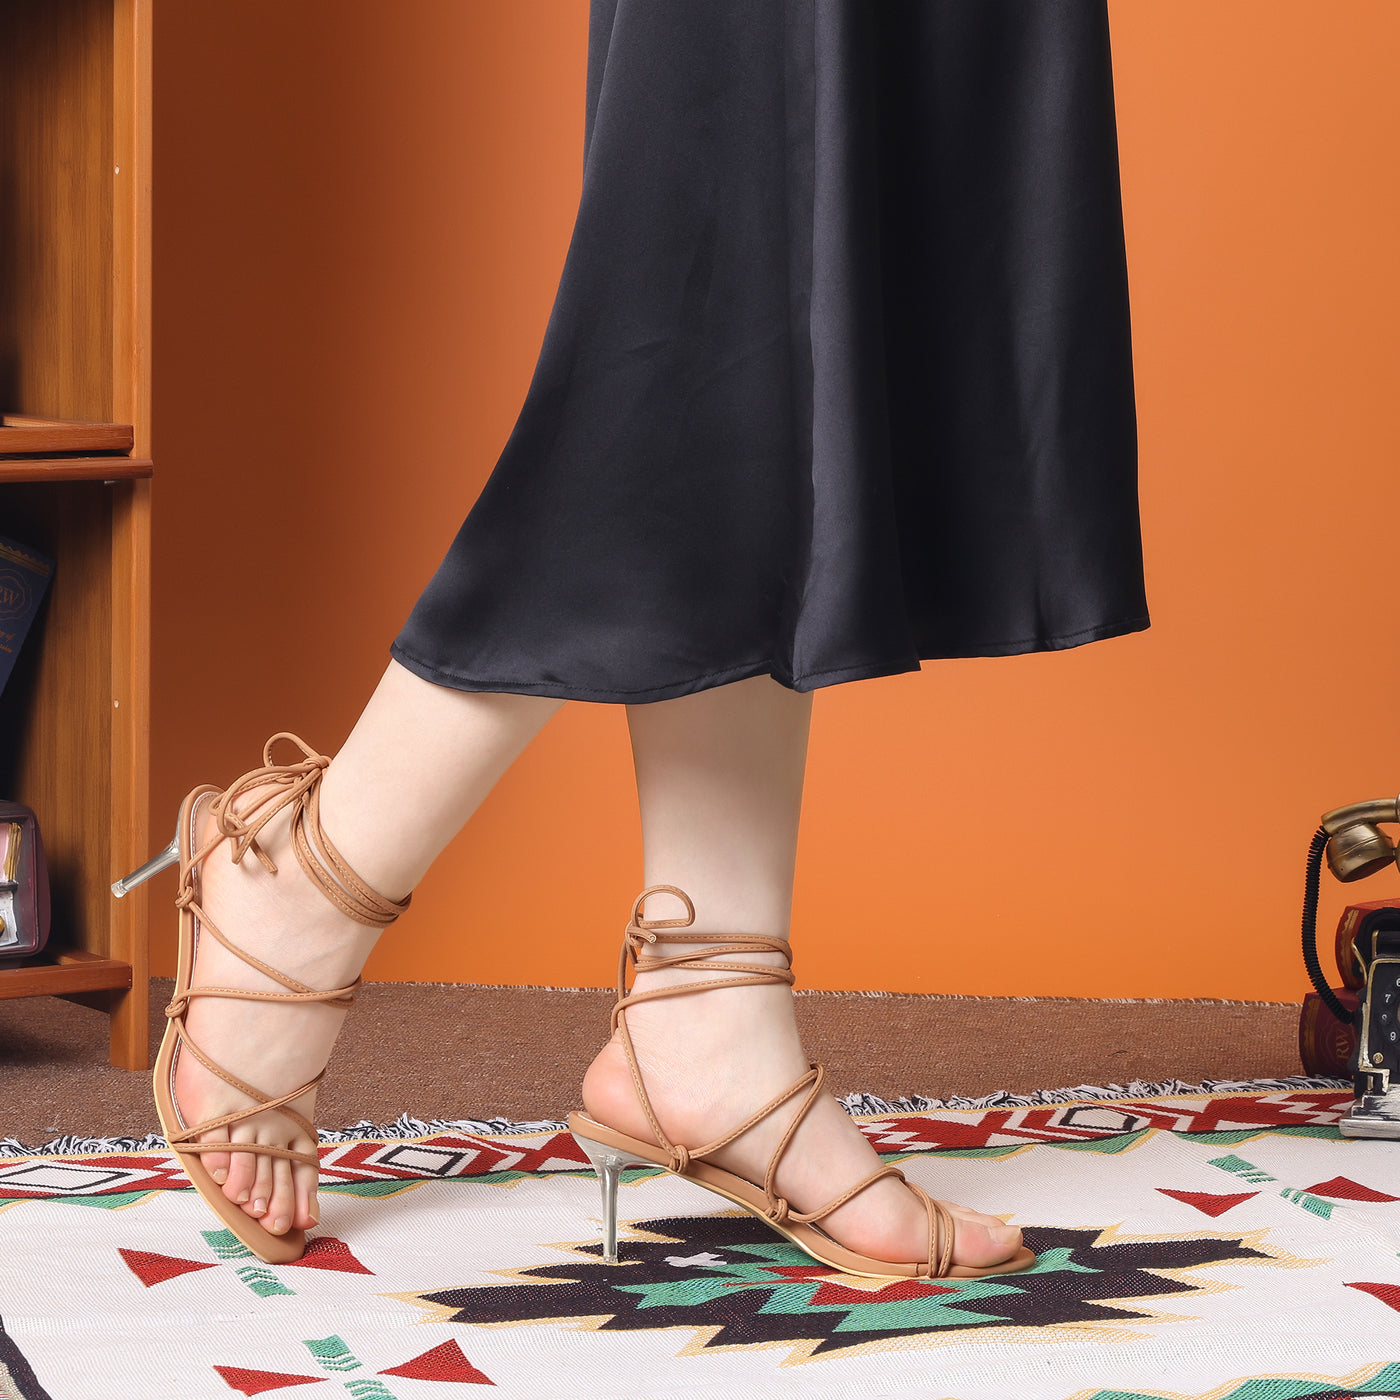 Allegra K Women's Lace Up Open Toe Strappy Stiletto Heels Sandals